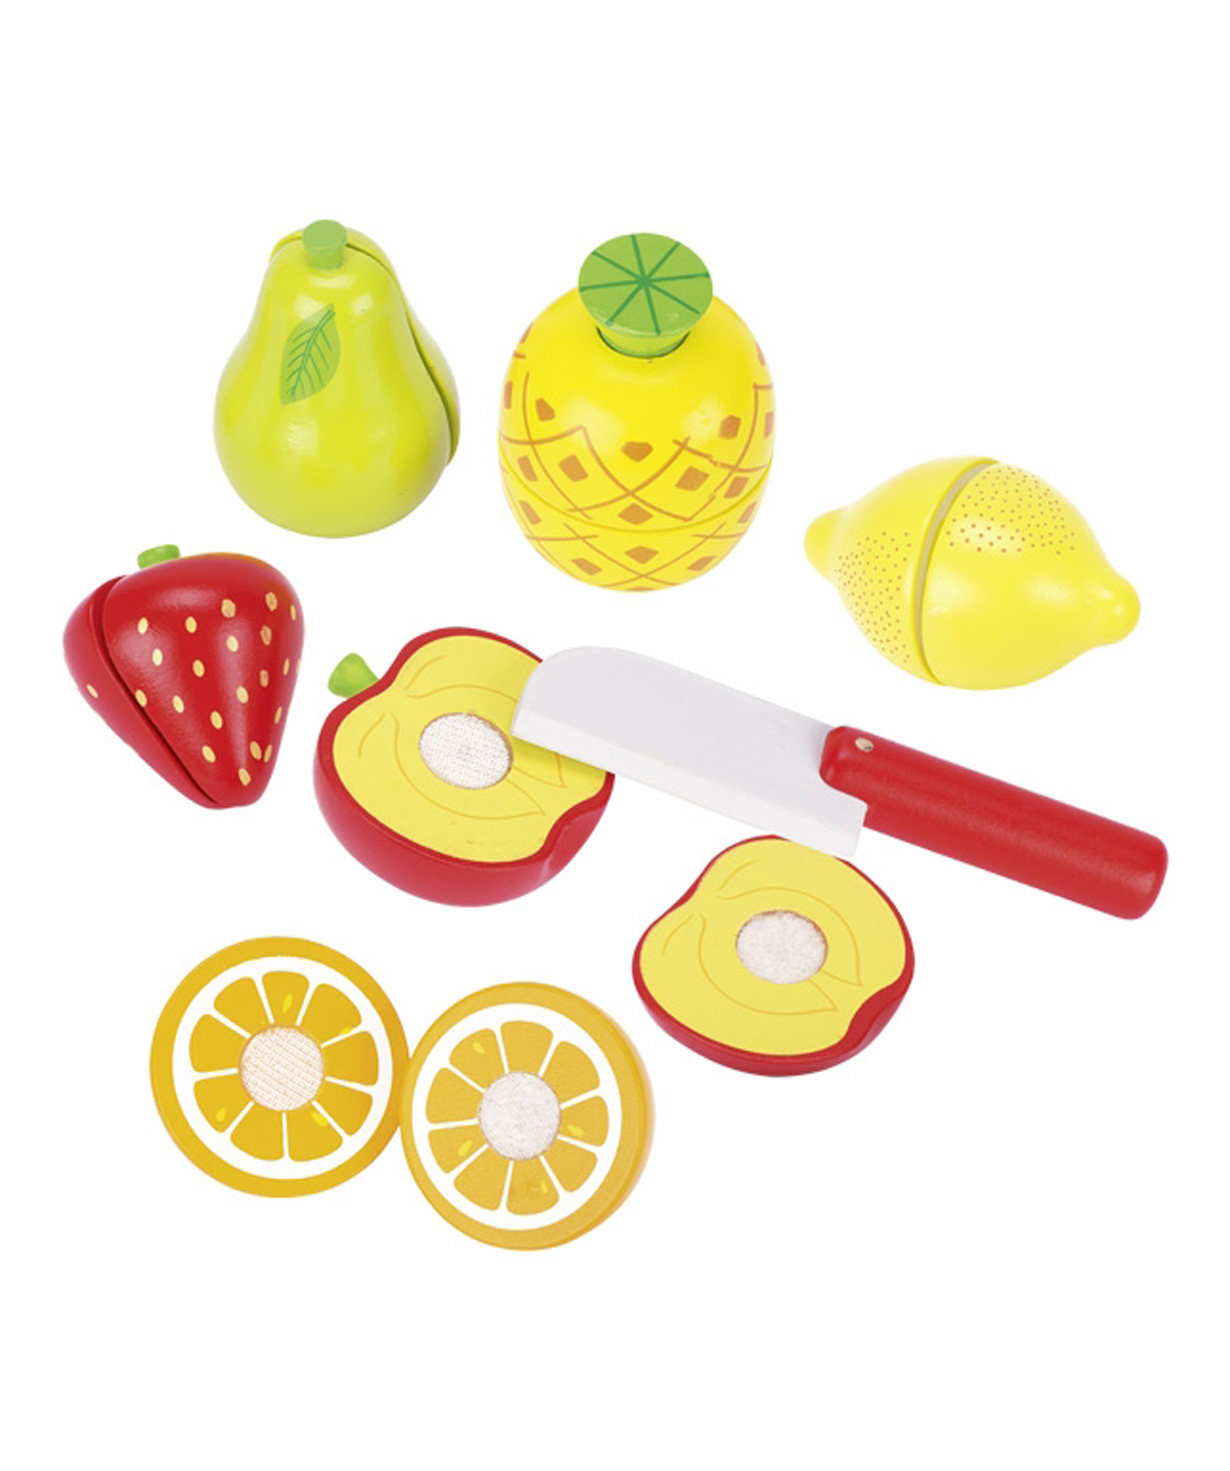 Toy `Goki Toys` Fruit with velcro